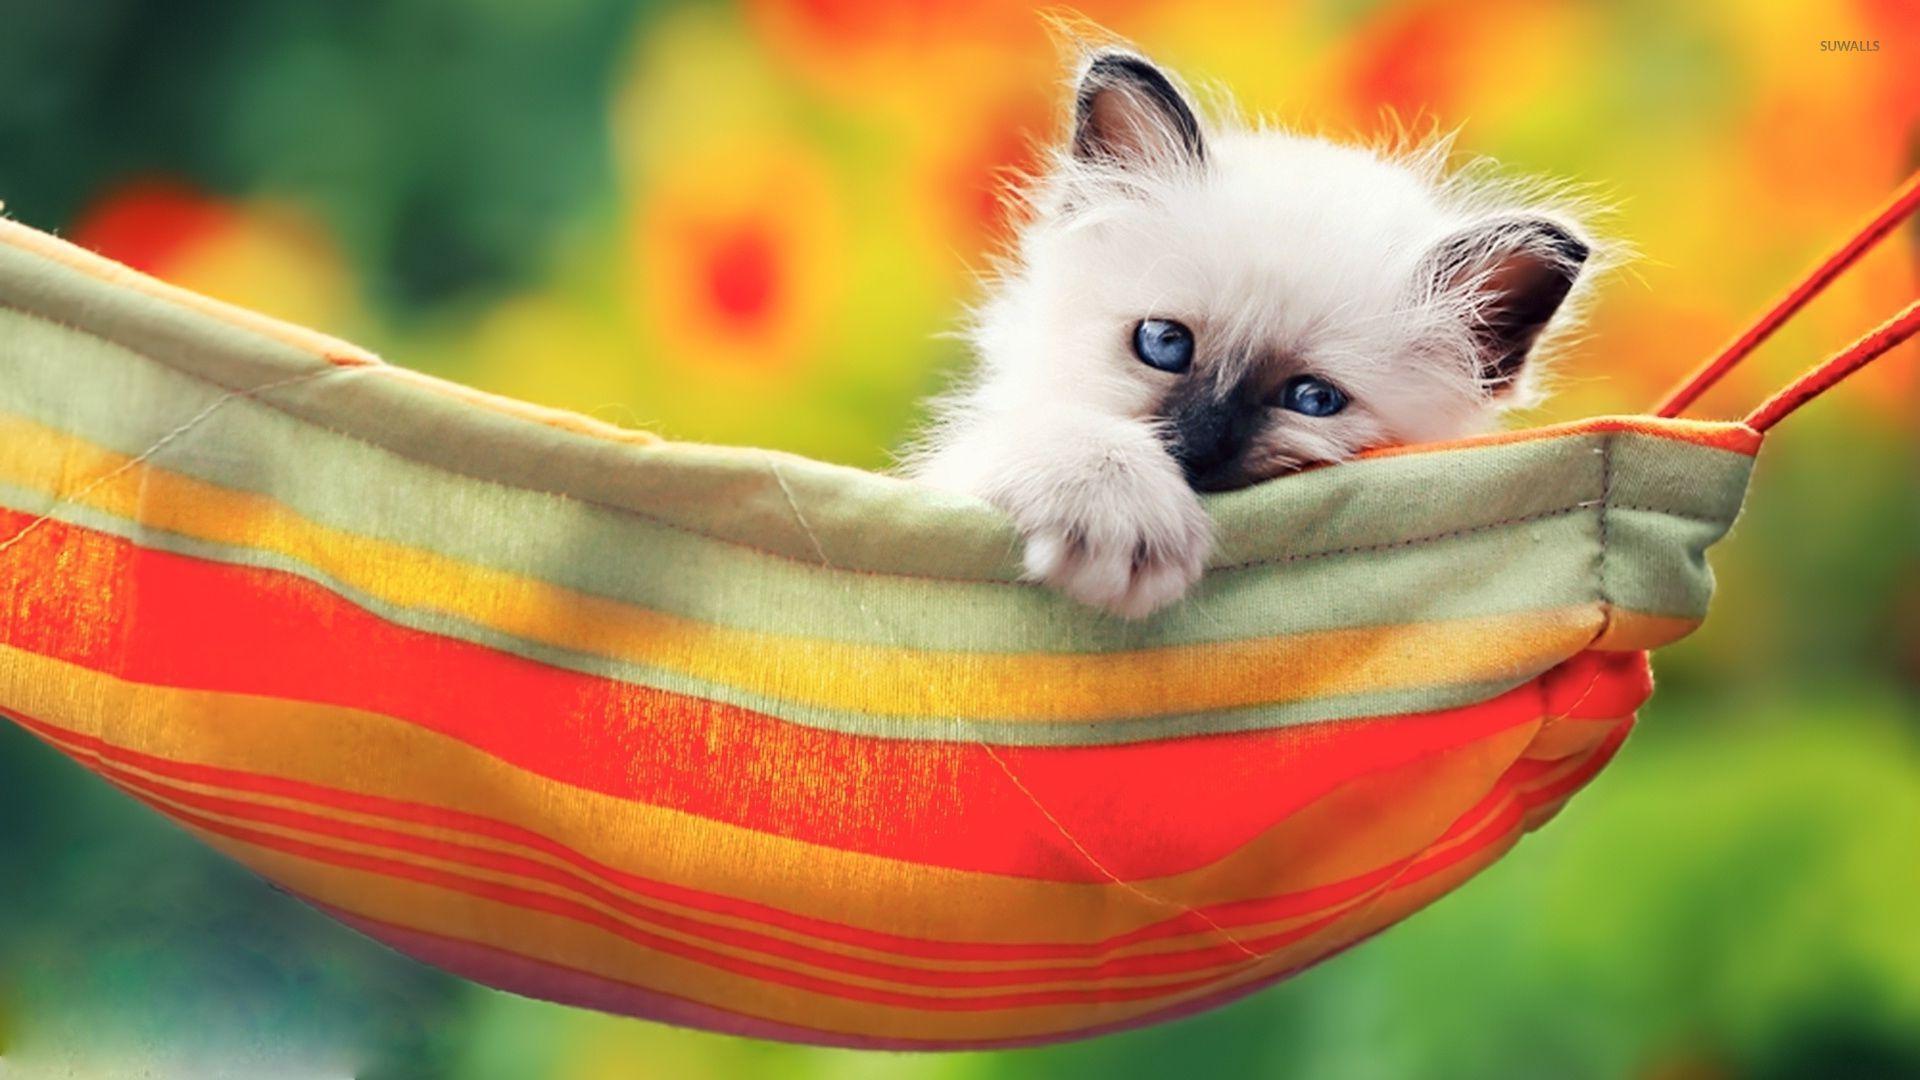 Kitten in the hammock wallpaper wallpaper